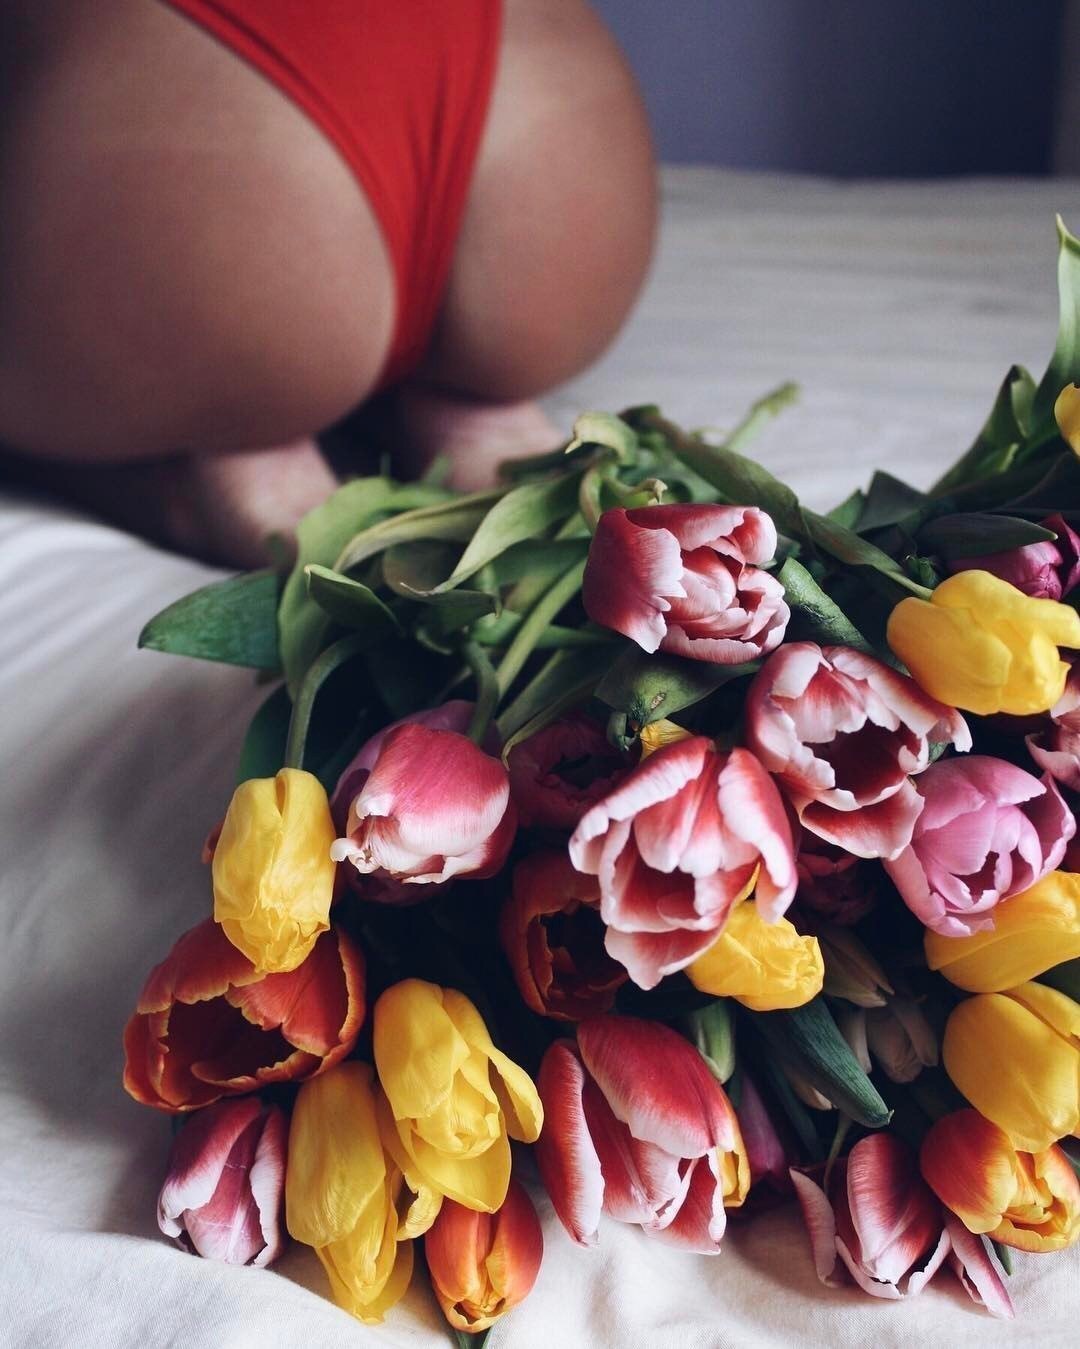 In a swimsuit - NSFW, Swimsuit, Nipples, Tulips, Flowers, Longpost